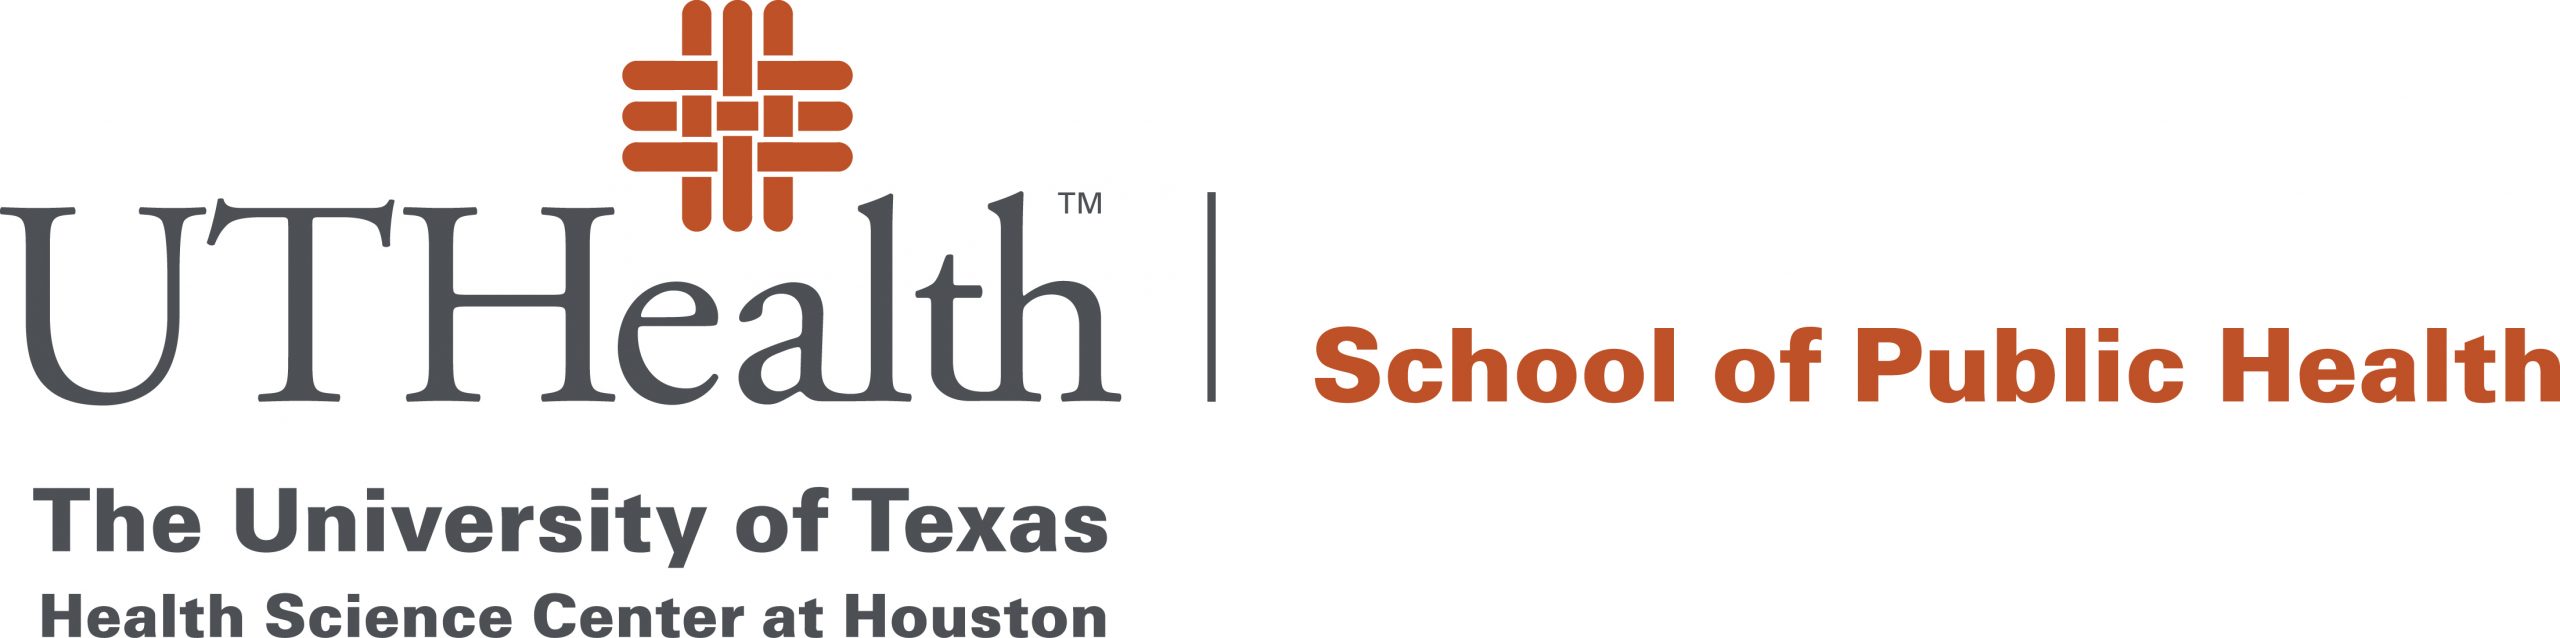 The University of Texas Health Science Center at Houston (UTHealth)